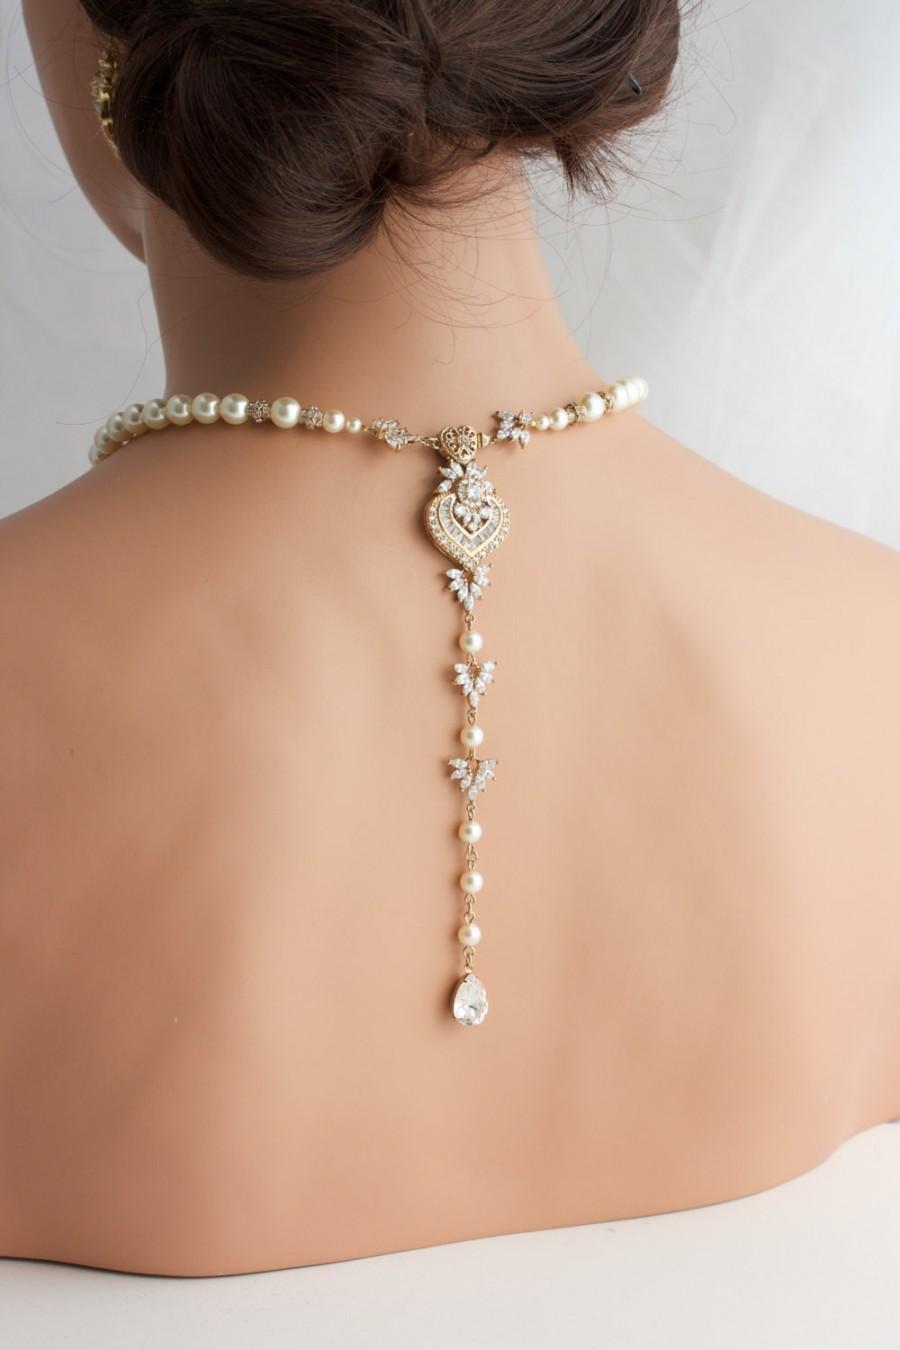 زفاف - Wedding Jewelry Gold Backdrop Necklace Long Back Drop Bridal Necklace Pearl Crystal Wedding Necklace EVIE